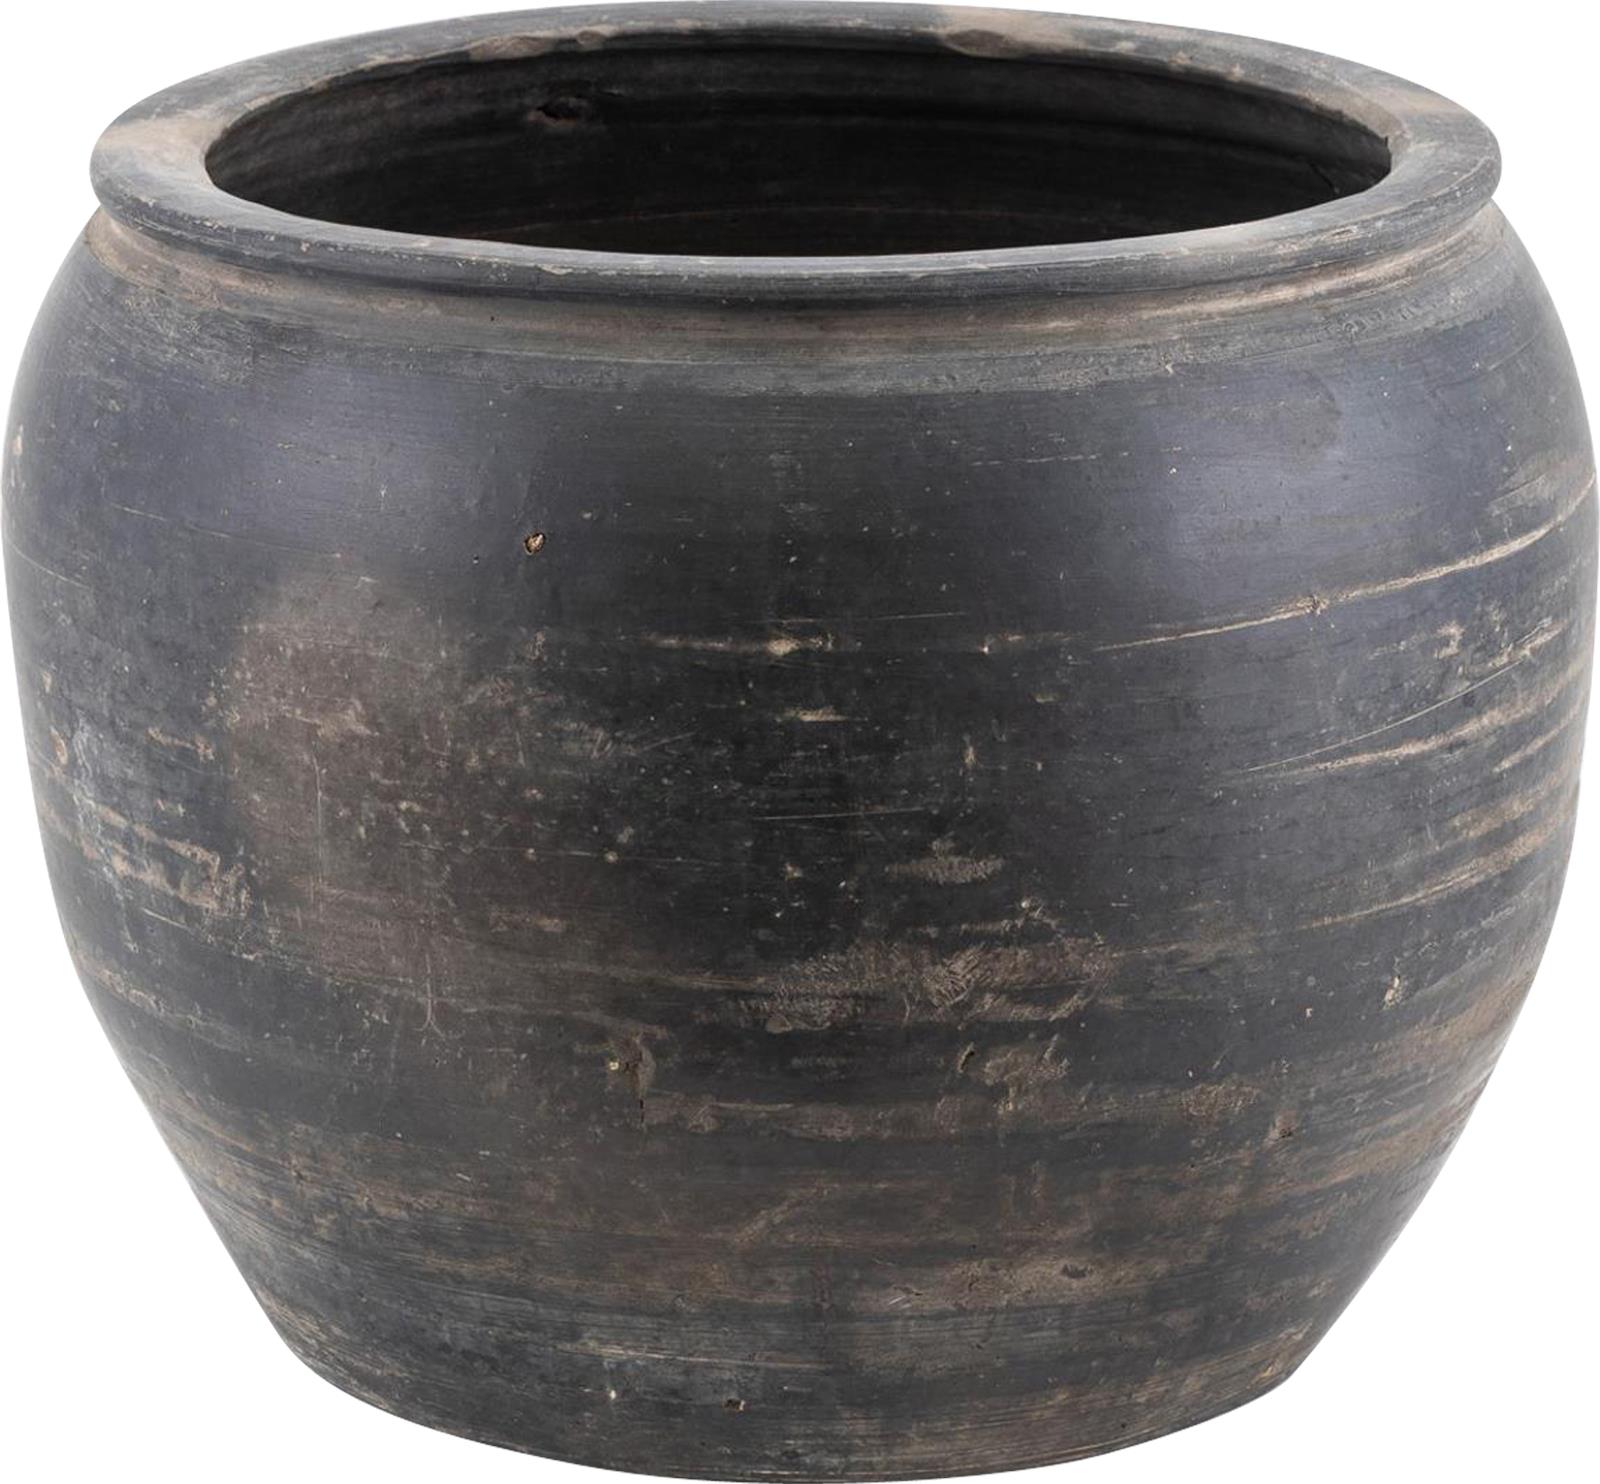 Water Jar Vase Vintage Large Gray Pottery Ceramic Handmade Hand-Cra-Image 1